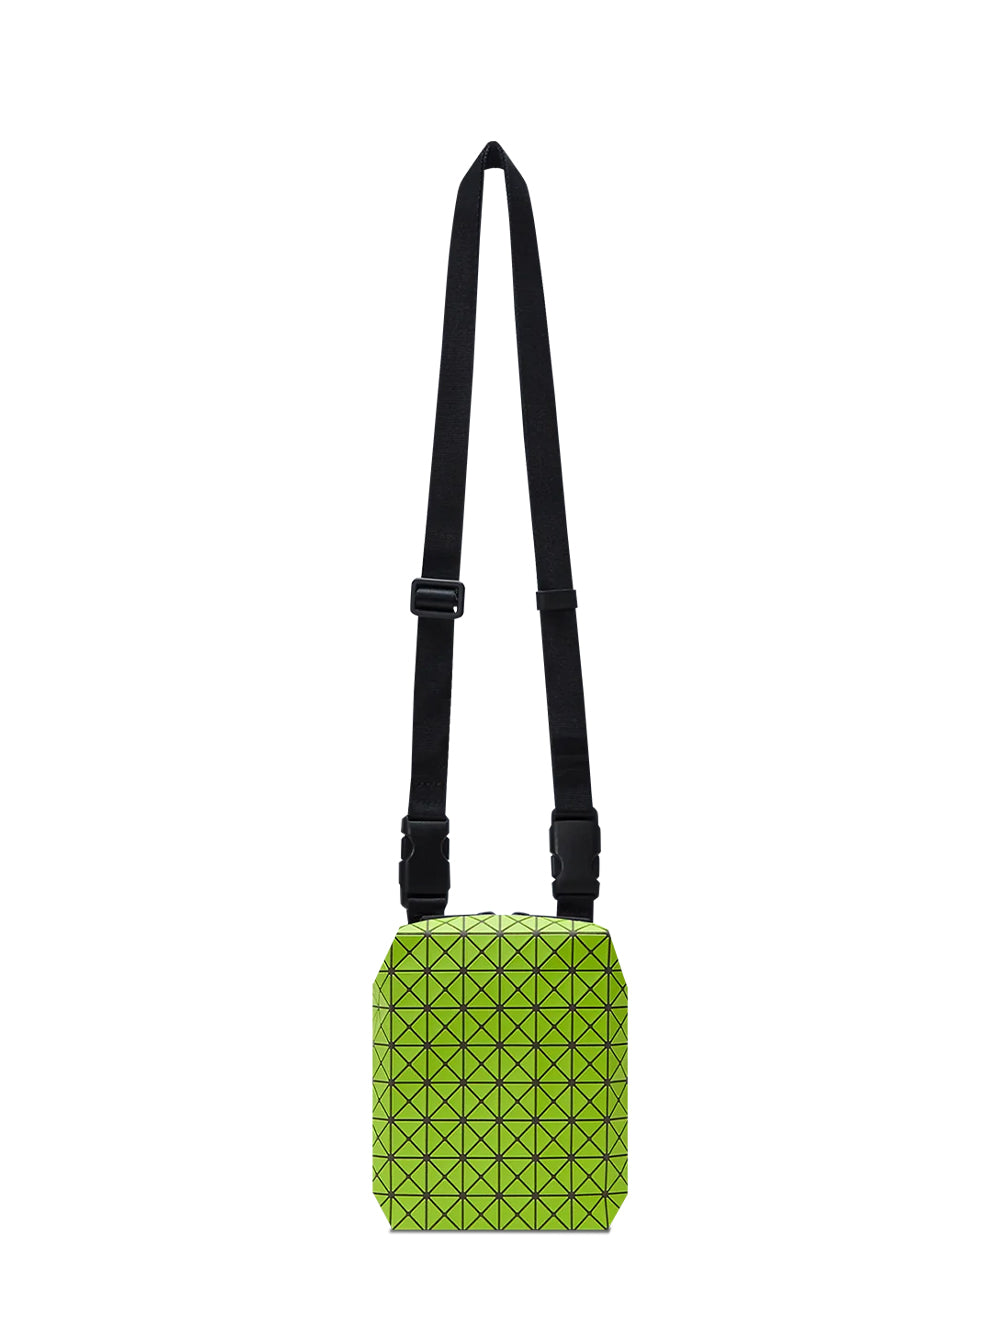 BEETLE Shoulder Bag (Pistachio Green)